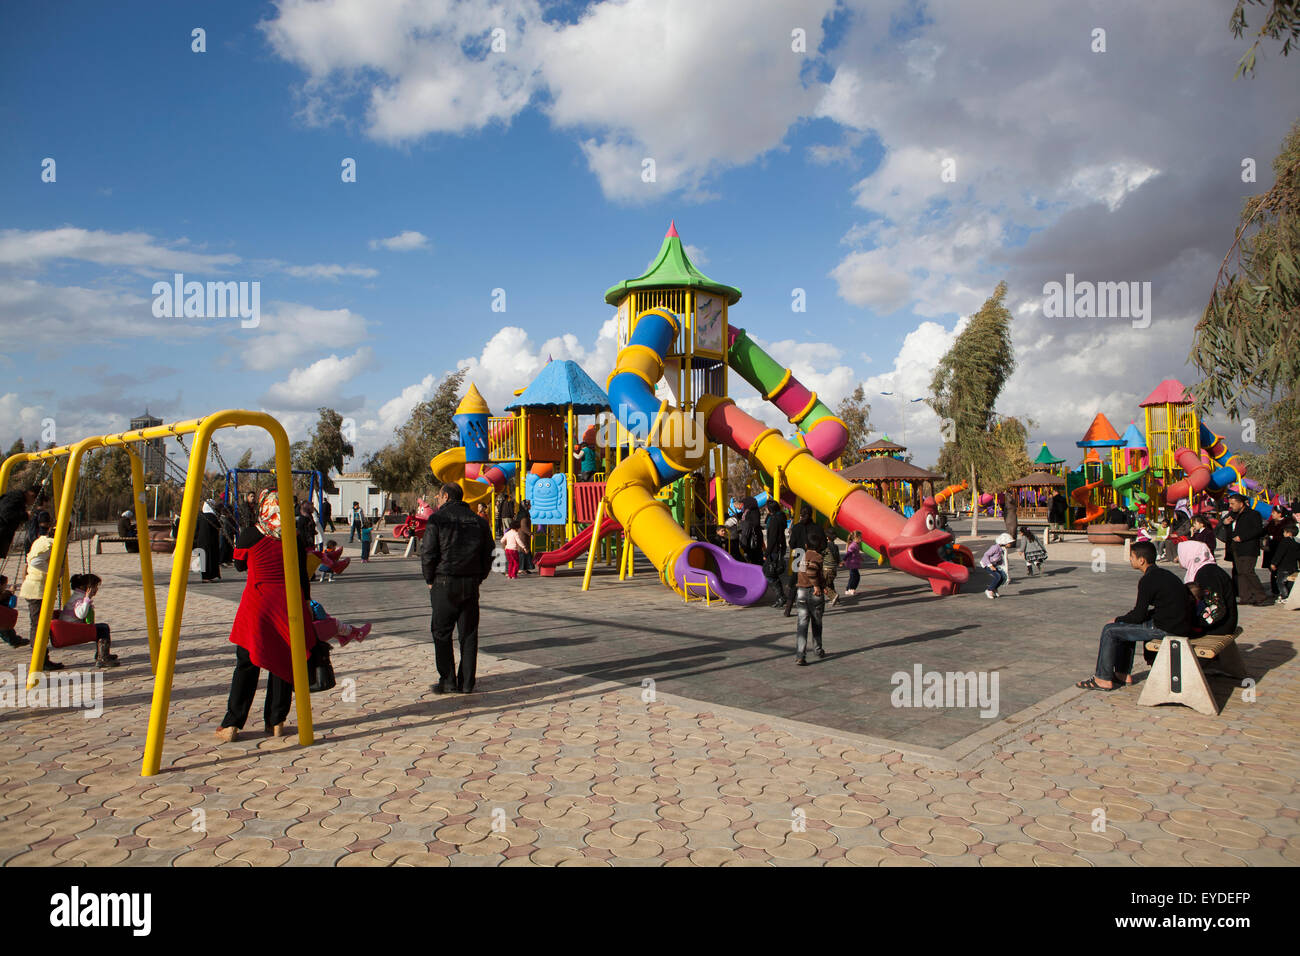 Children's Playground In The Parks Of Erbil, Iraqi Kurdistan, Iraq Stock Photo